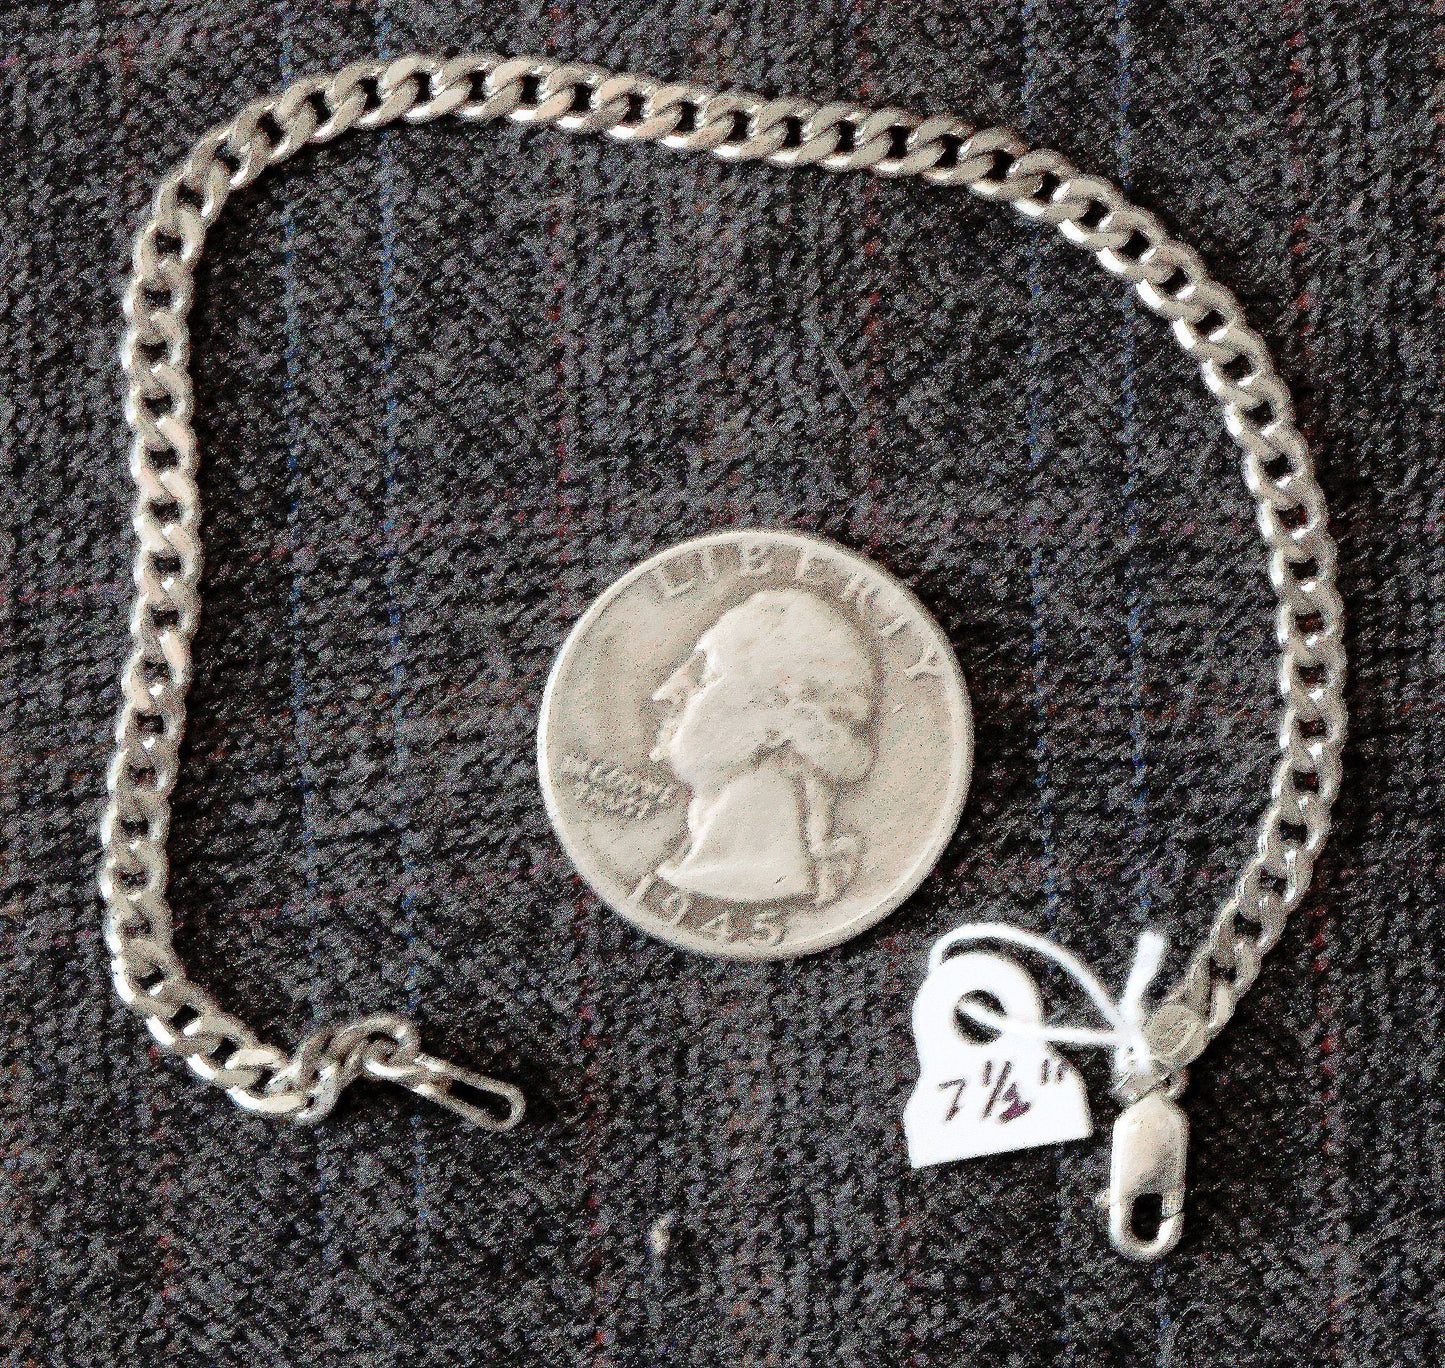 Heavy, 7 1/2 inch sterling silver curb link bracelet